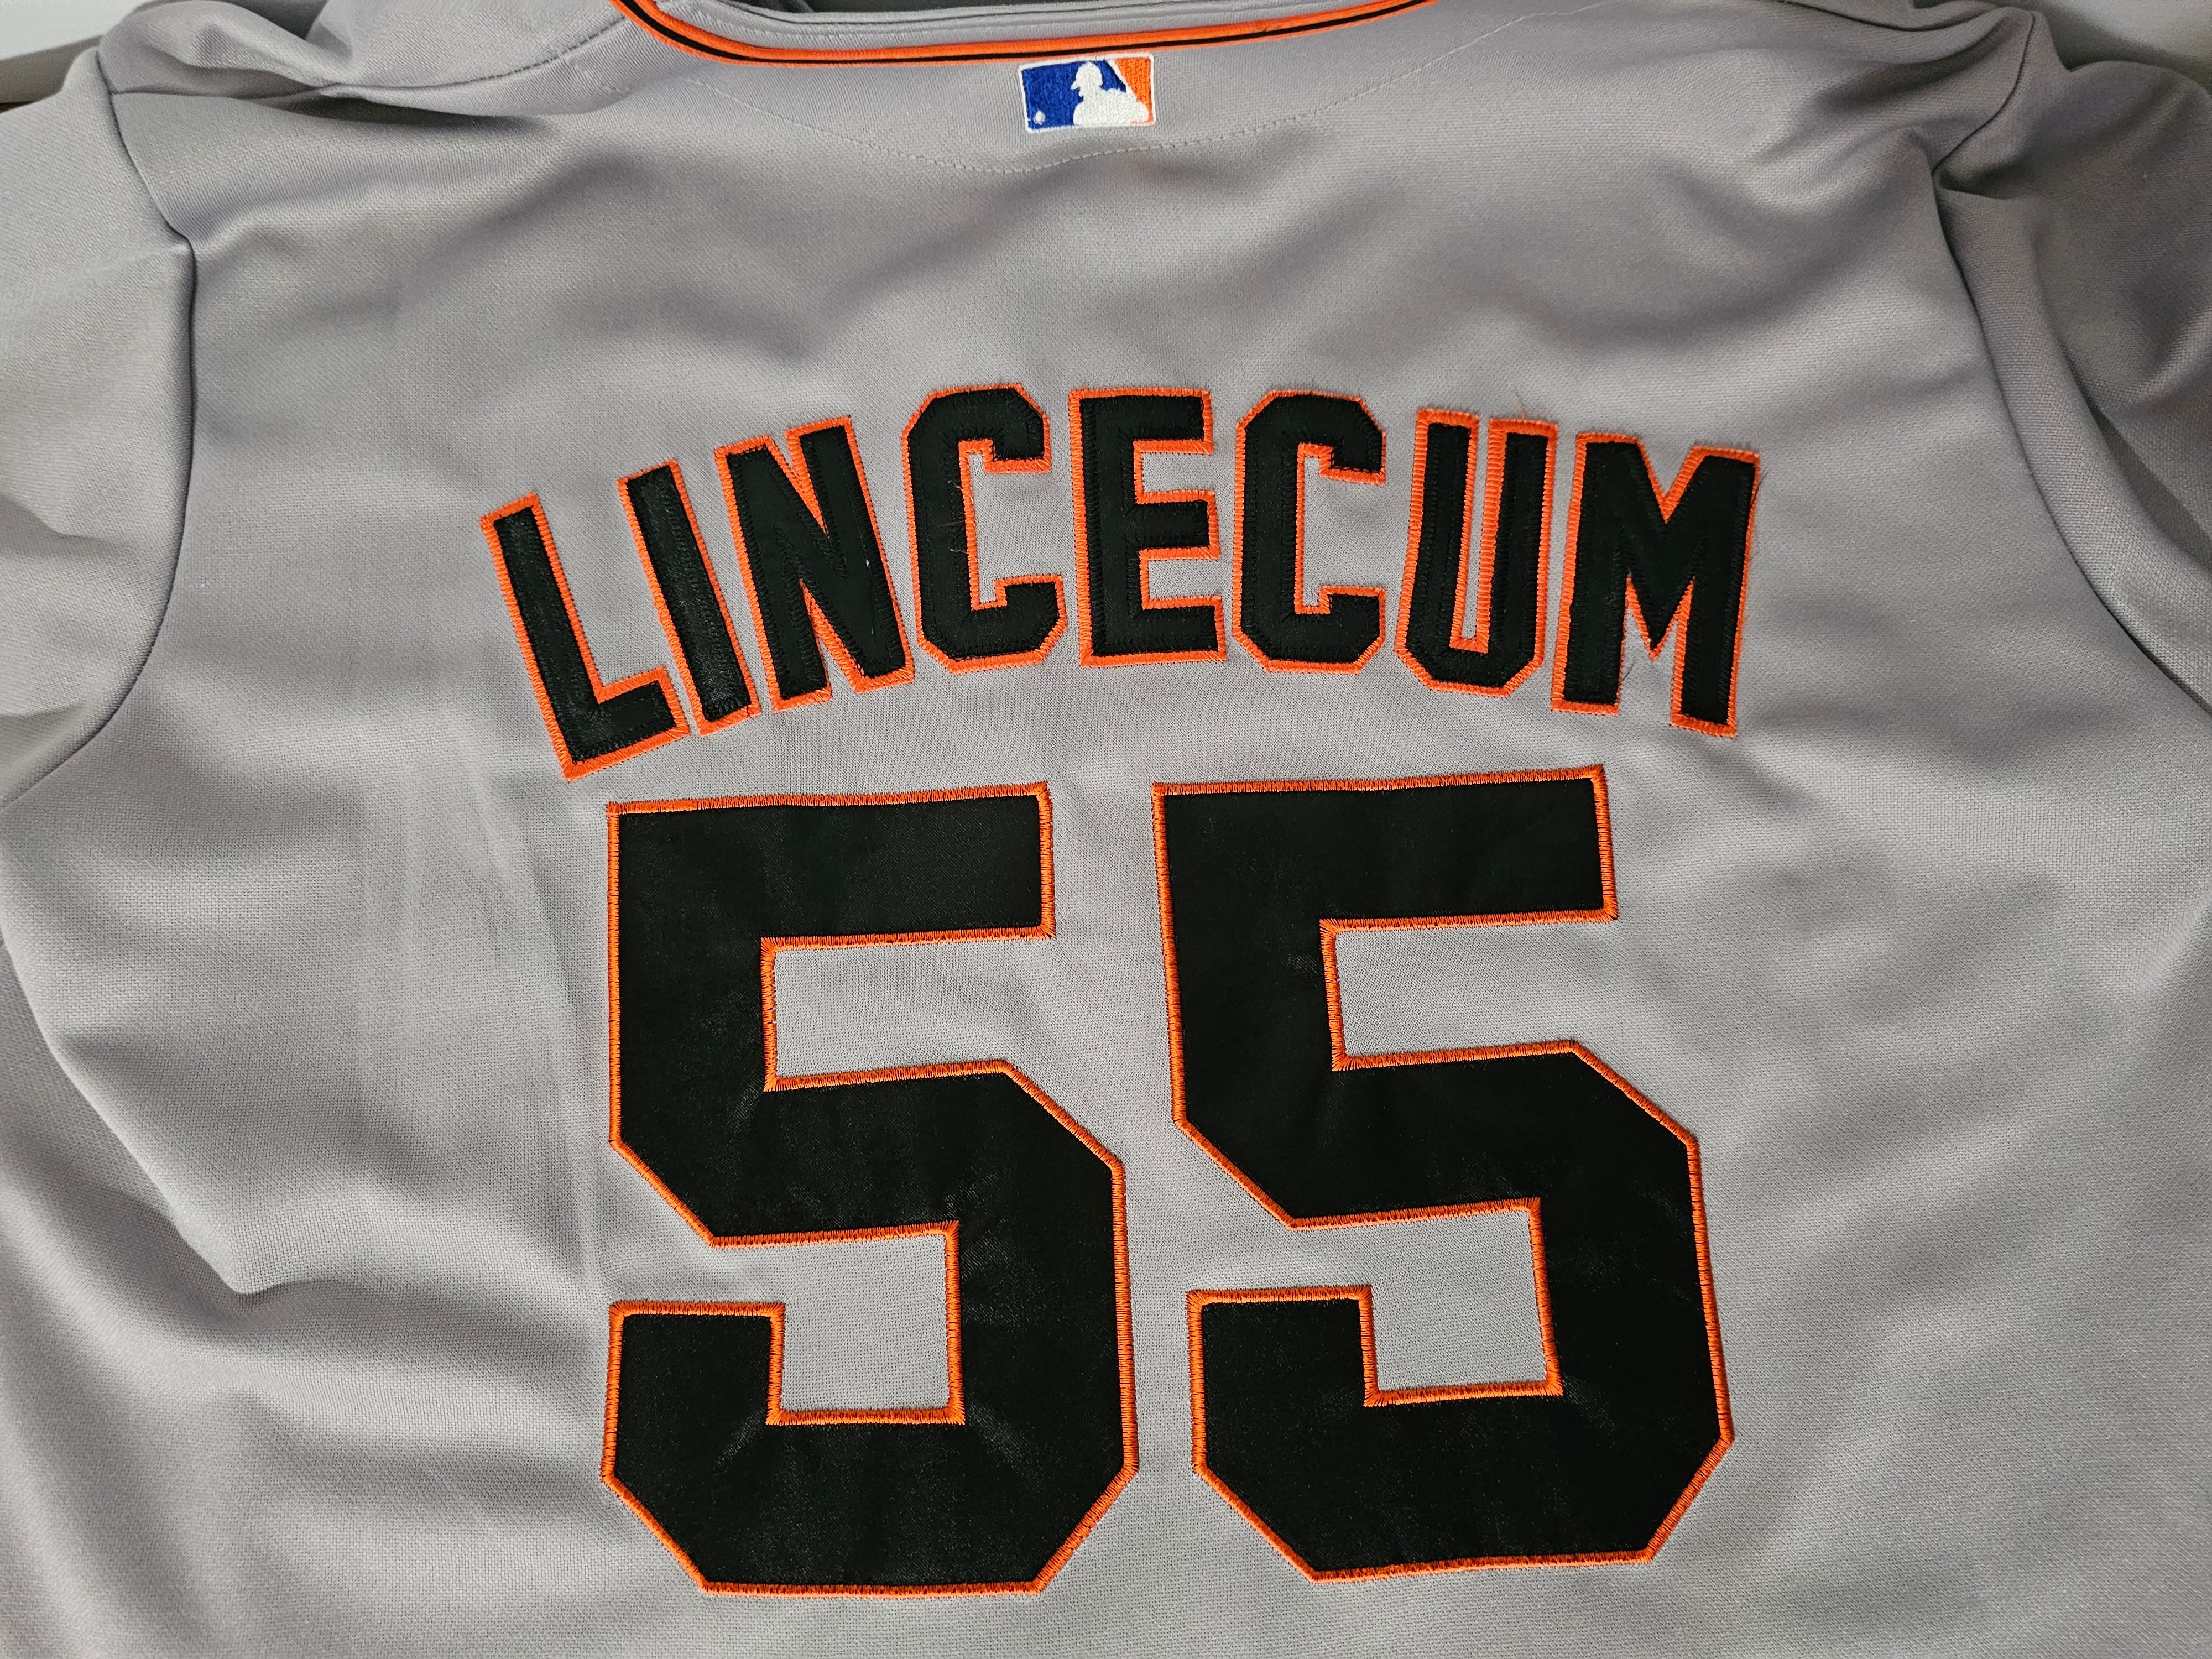 San Francisco Giants - Tim Lincecum - MLB 2009 All-Star Game Replica Jersey.